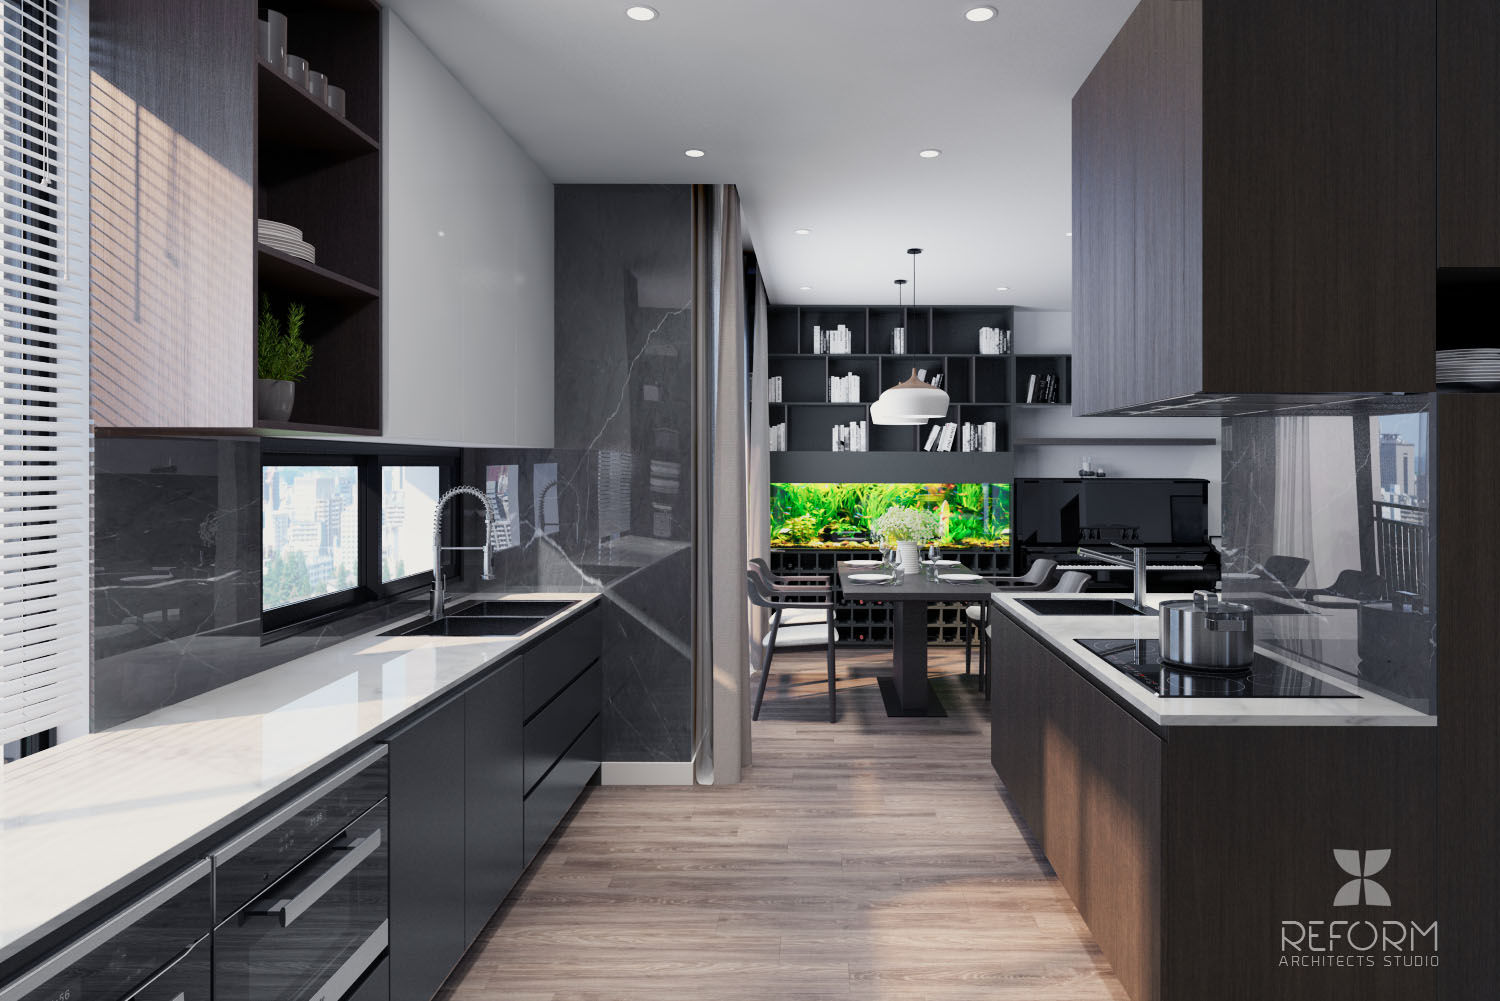 HD303 - Apartment, Reform Architects Reform Architects Kitchen units